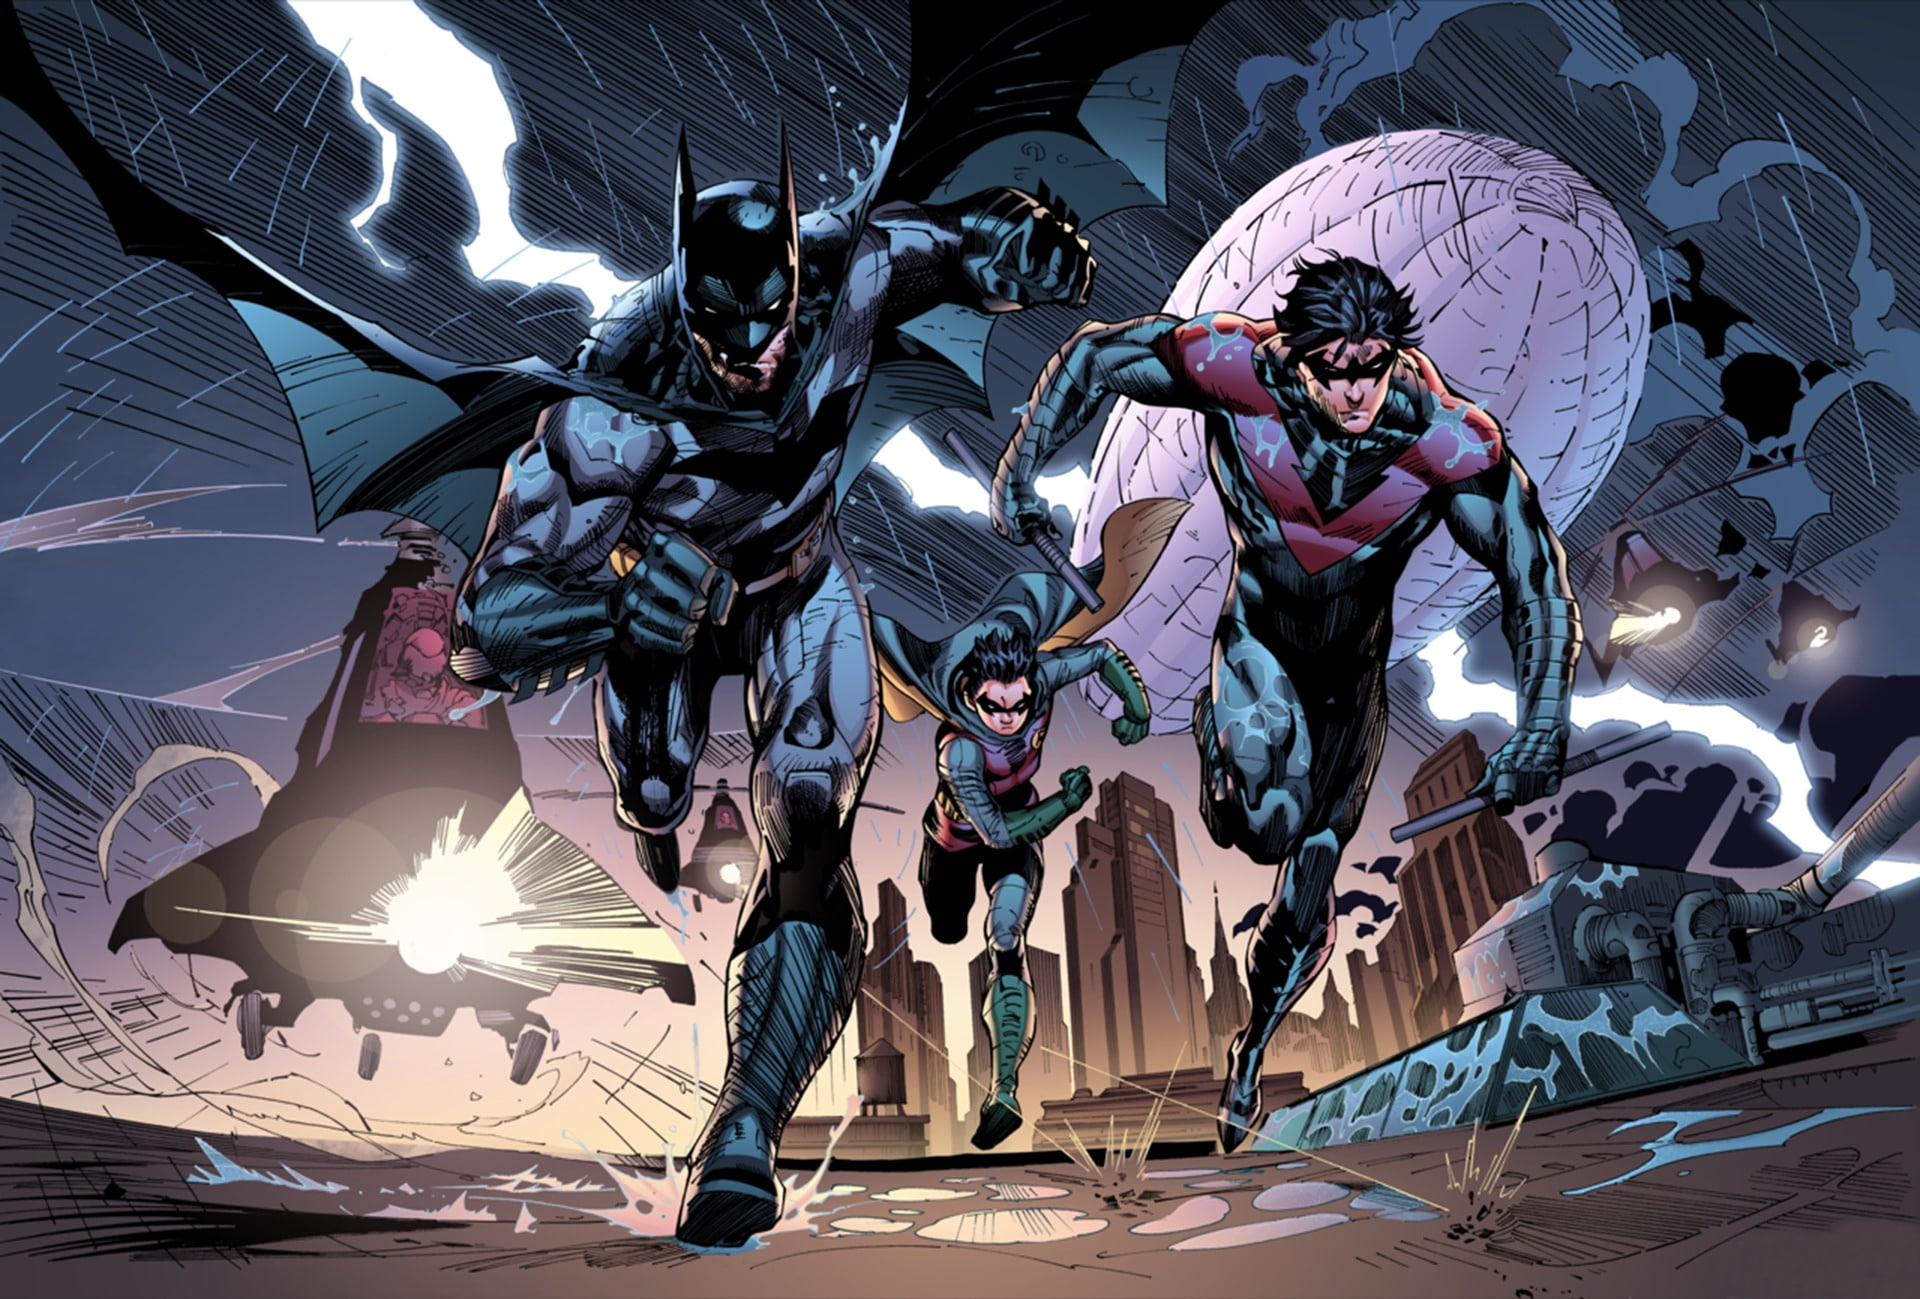 DC Batman and Robin digital wallpaper, dc comics, Nightwing, art and craft